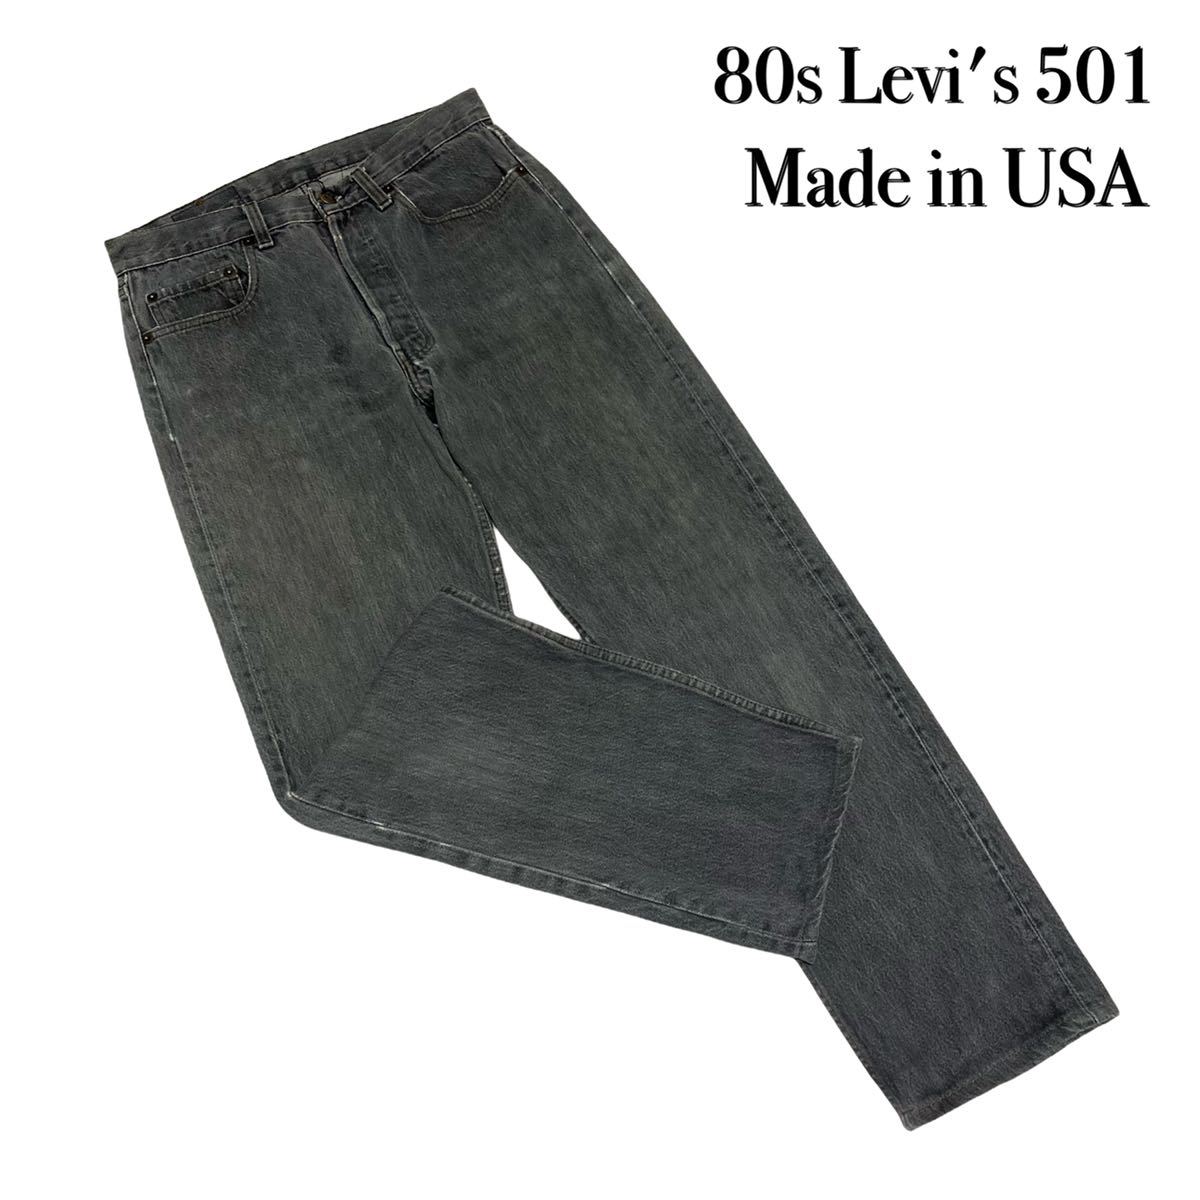 80s Levi's 501 ブラック デニム 黒 ストライプ 先染め USA製 smcint.com